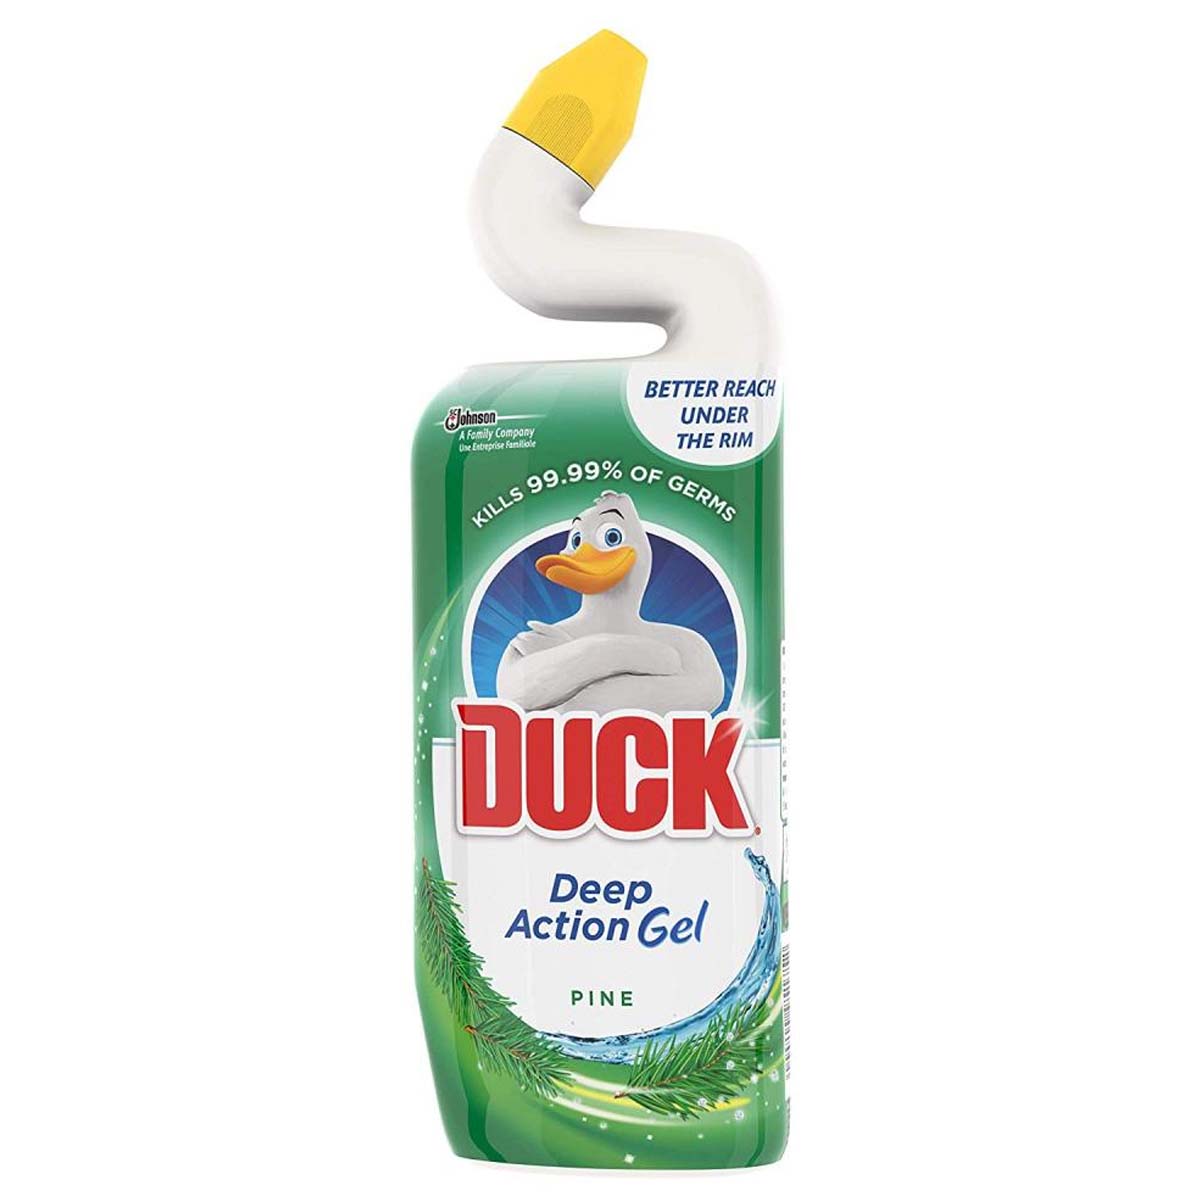 Duck - Deep Action Gel Toilet Liquid Cleaner Pine - 750ml - Continental Food Store